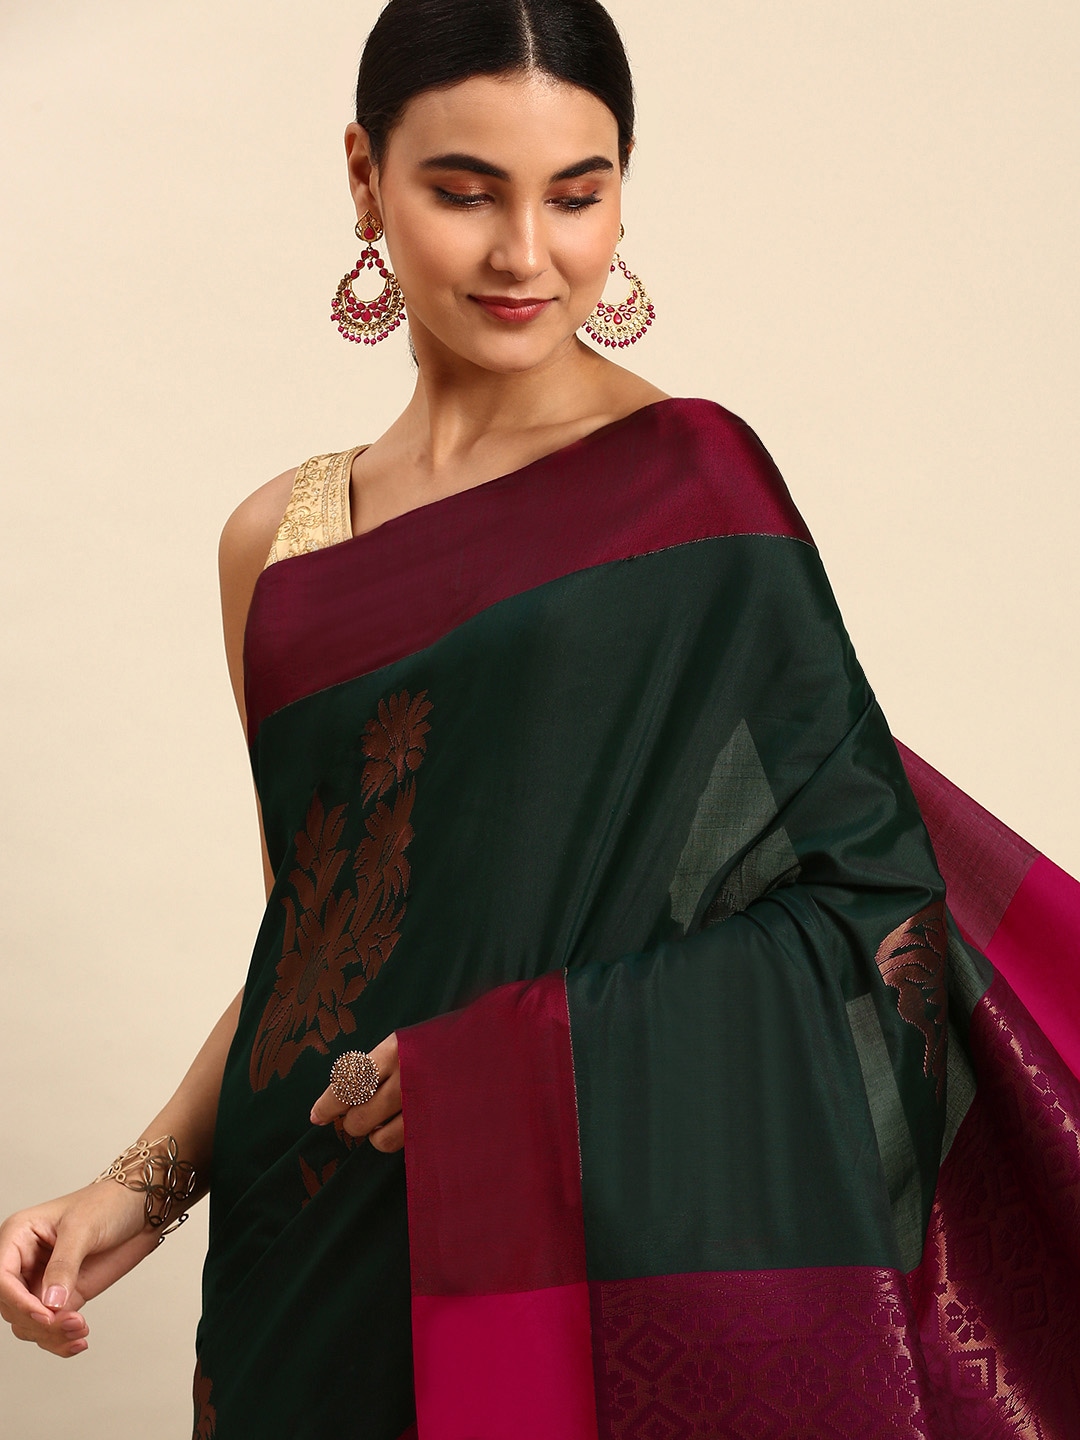 Pothys Green & Copper-Toned Ethnic Motifs Art Silk Saree Price in India